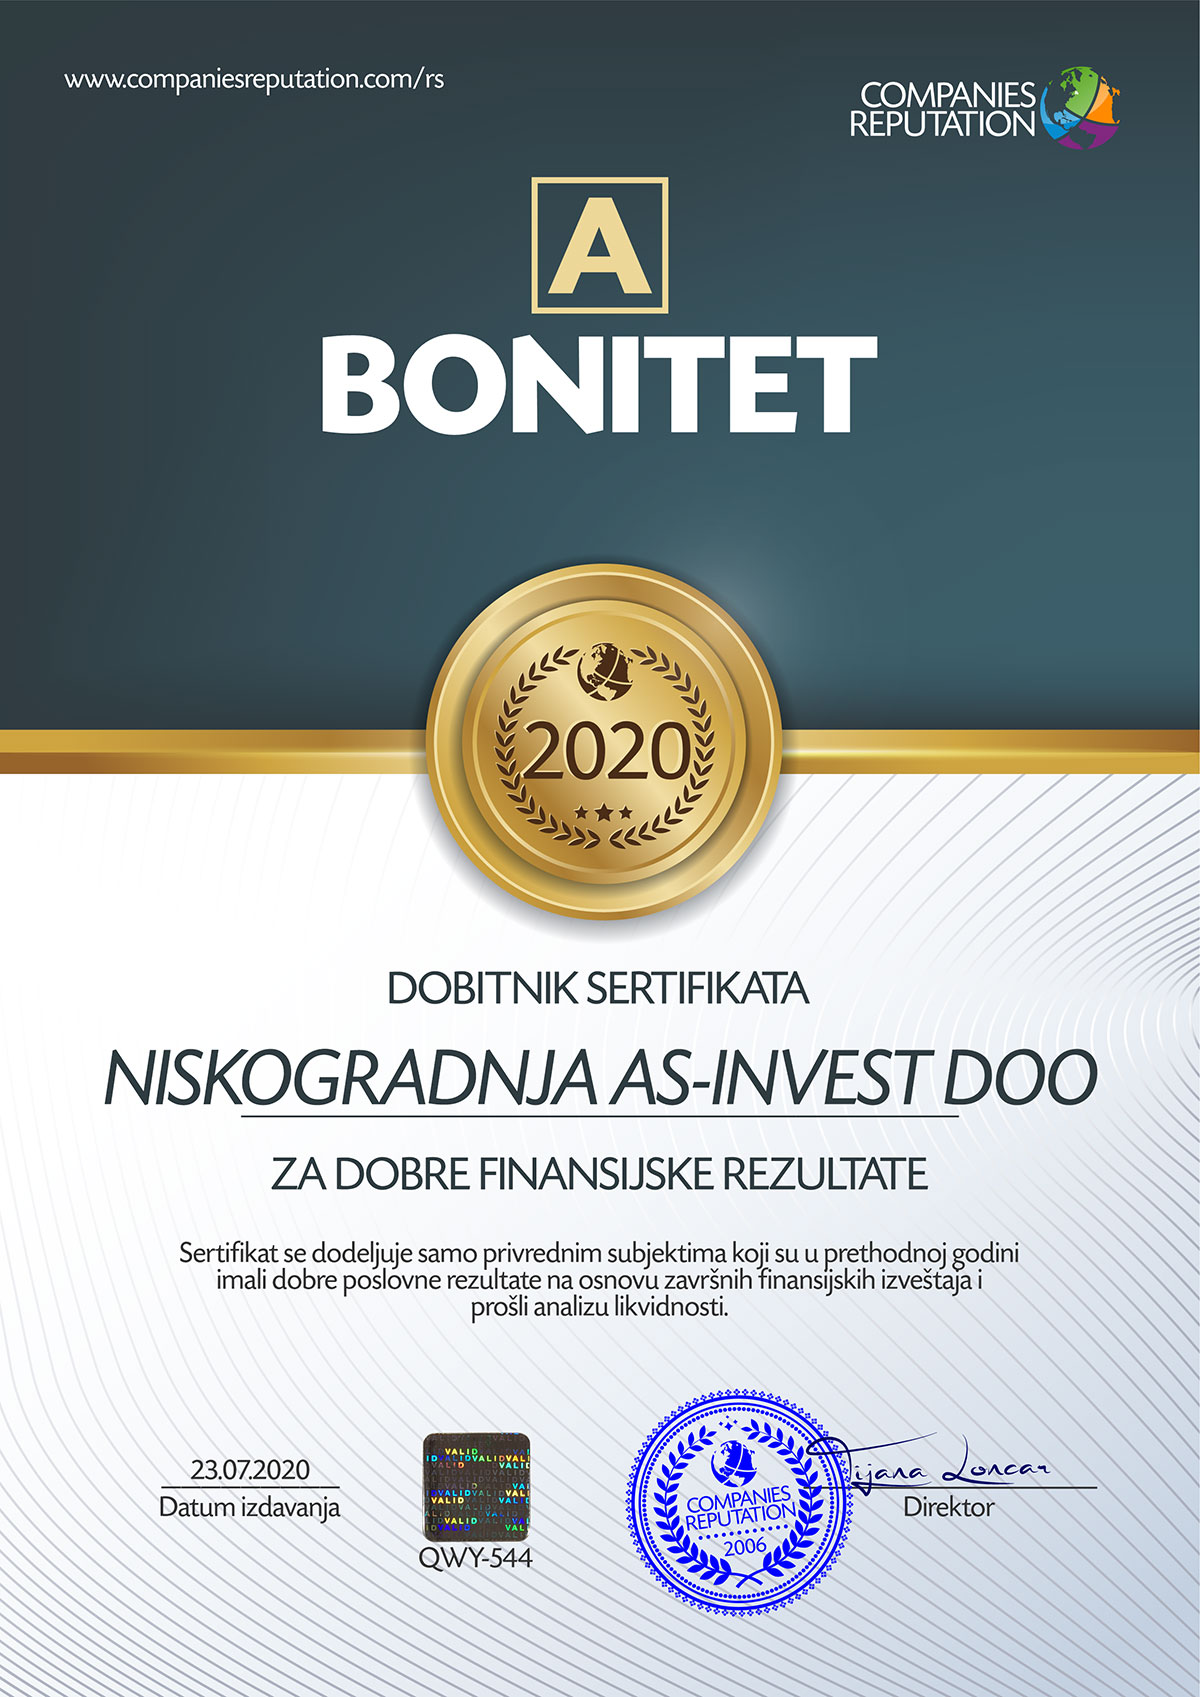 sertifikat A za bonitet as invest